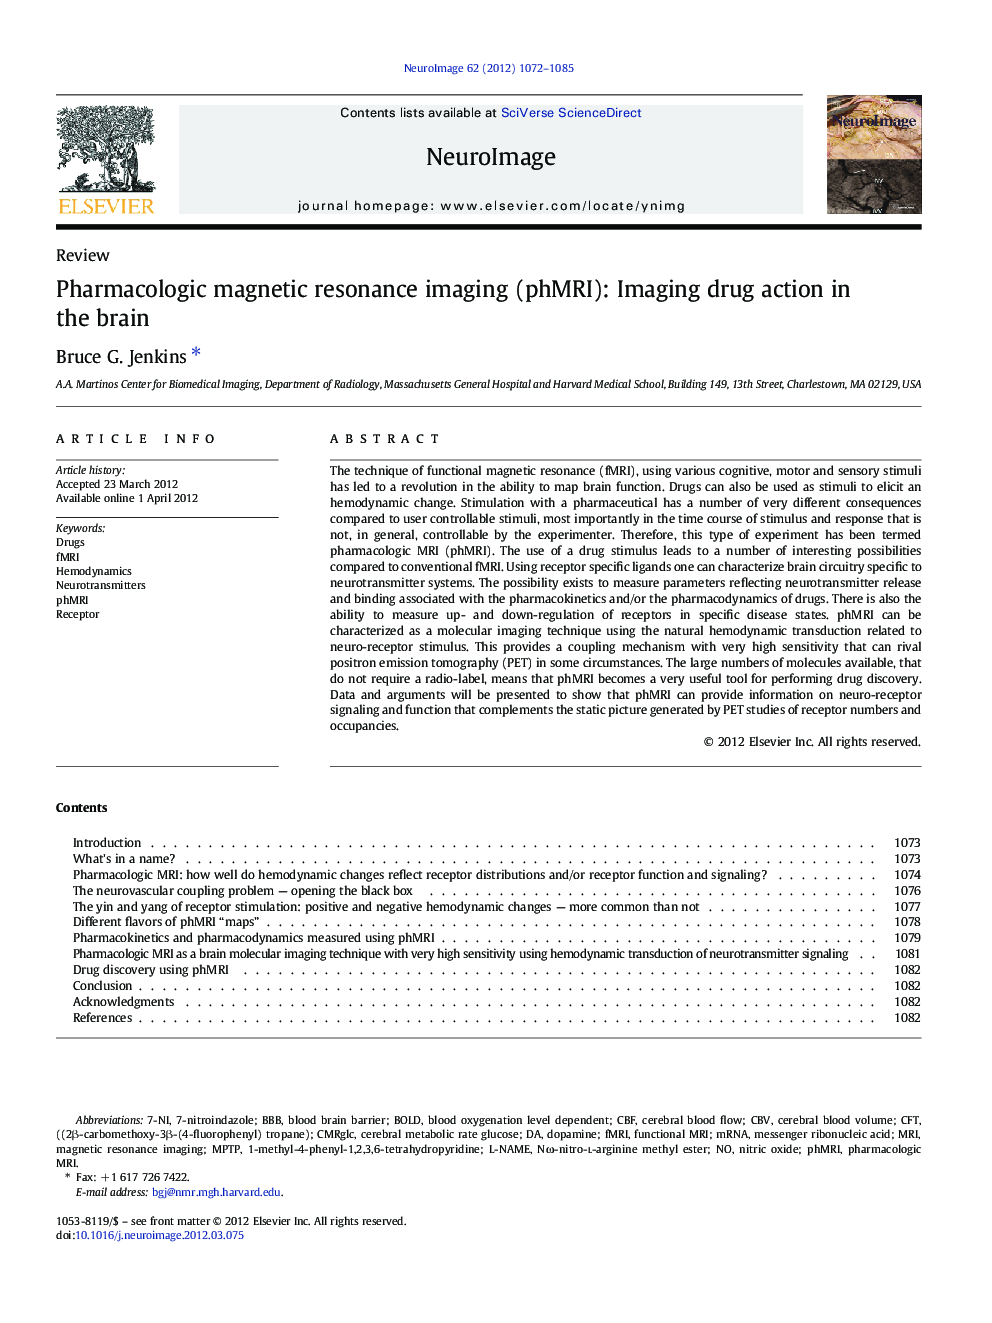 Pharmacologic magnetic resonance imaging (phMRI): Imaging drug action in the brain